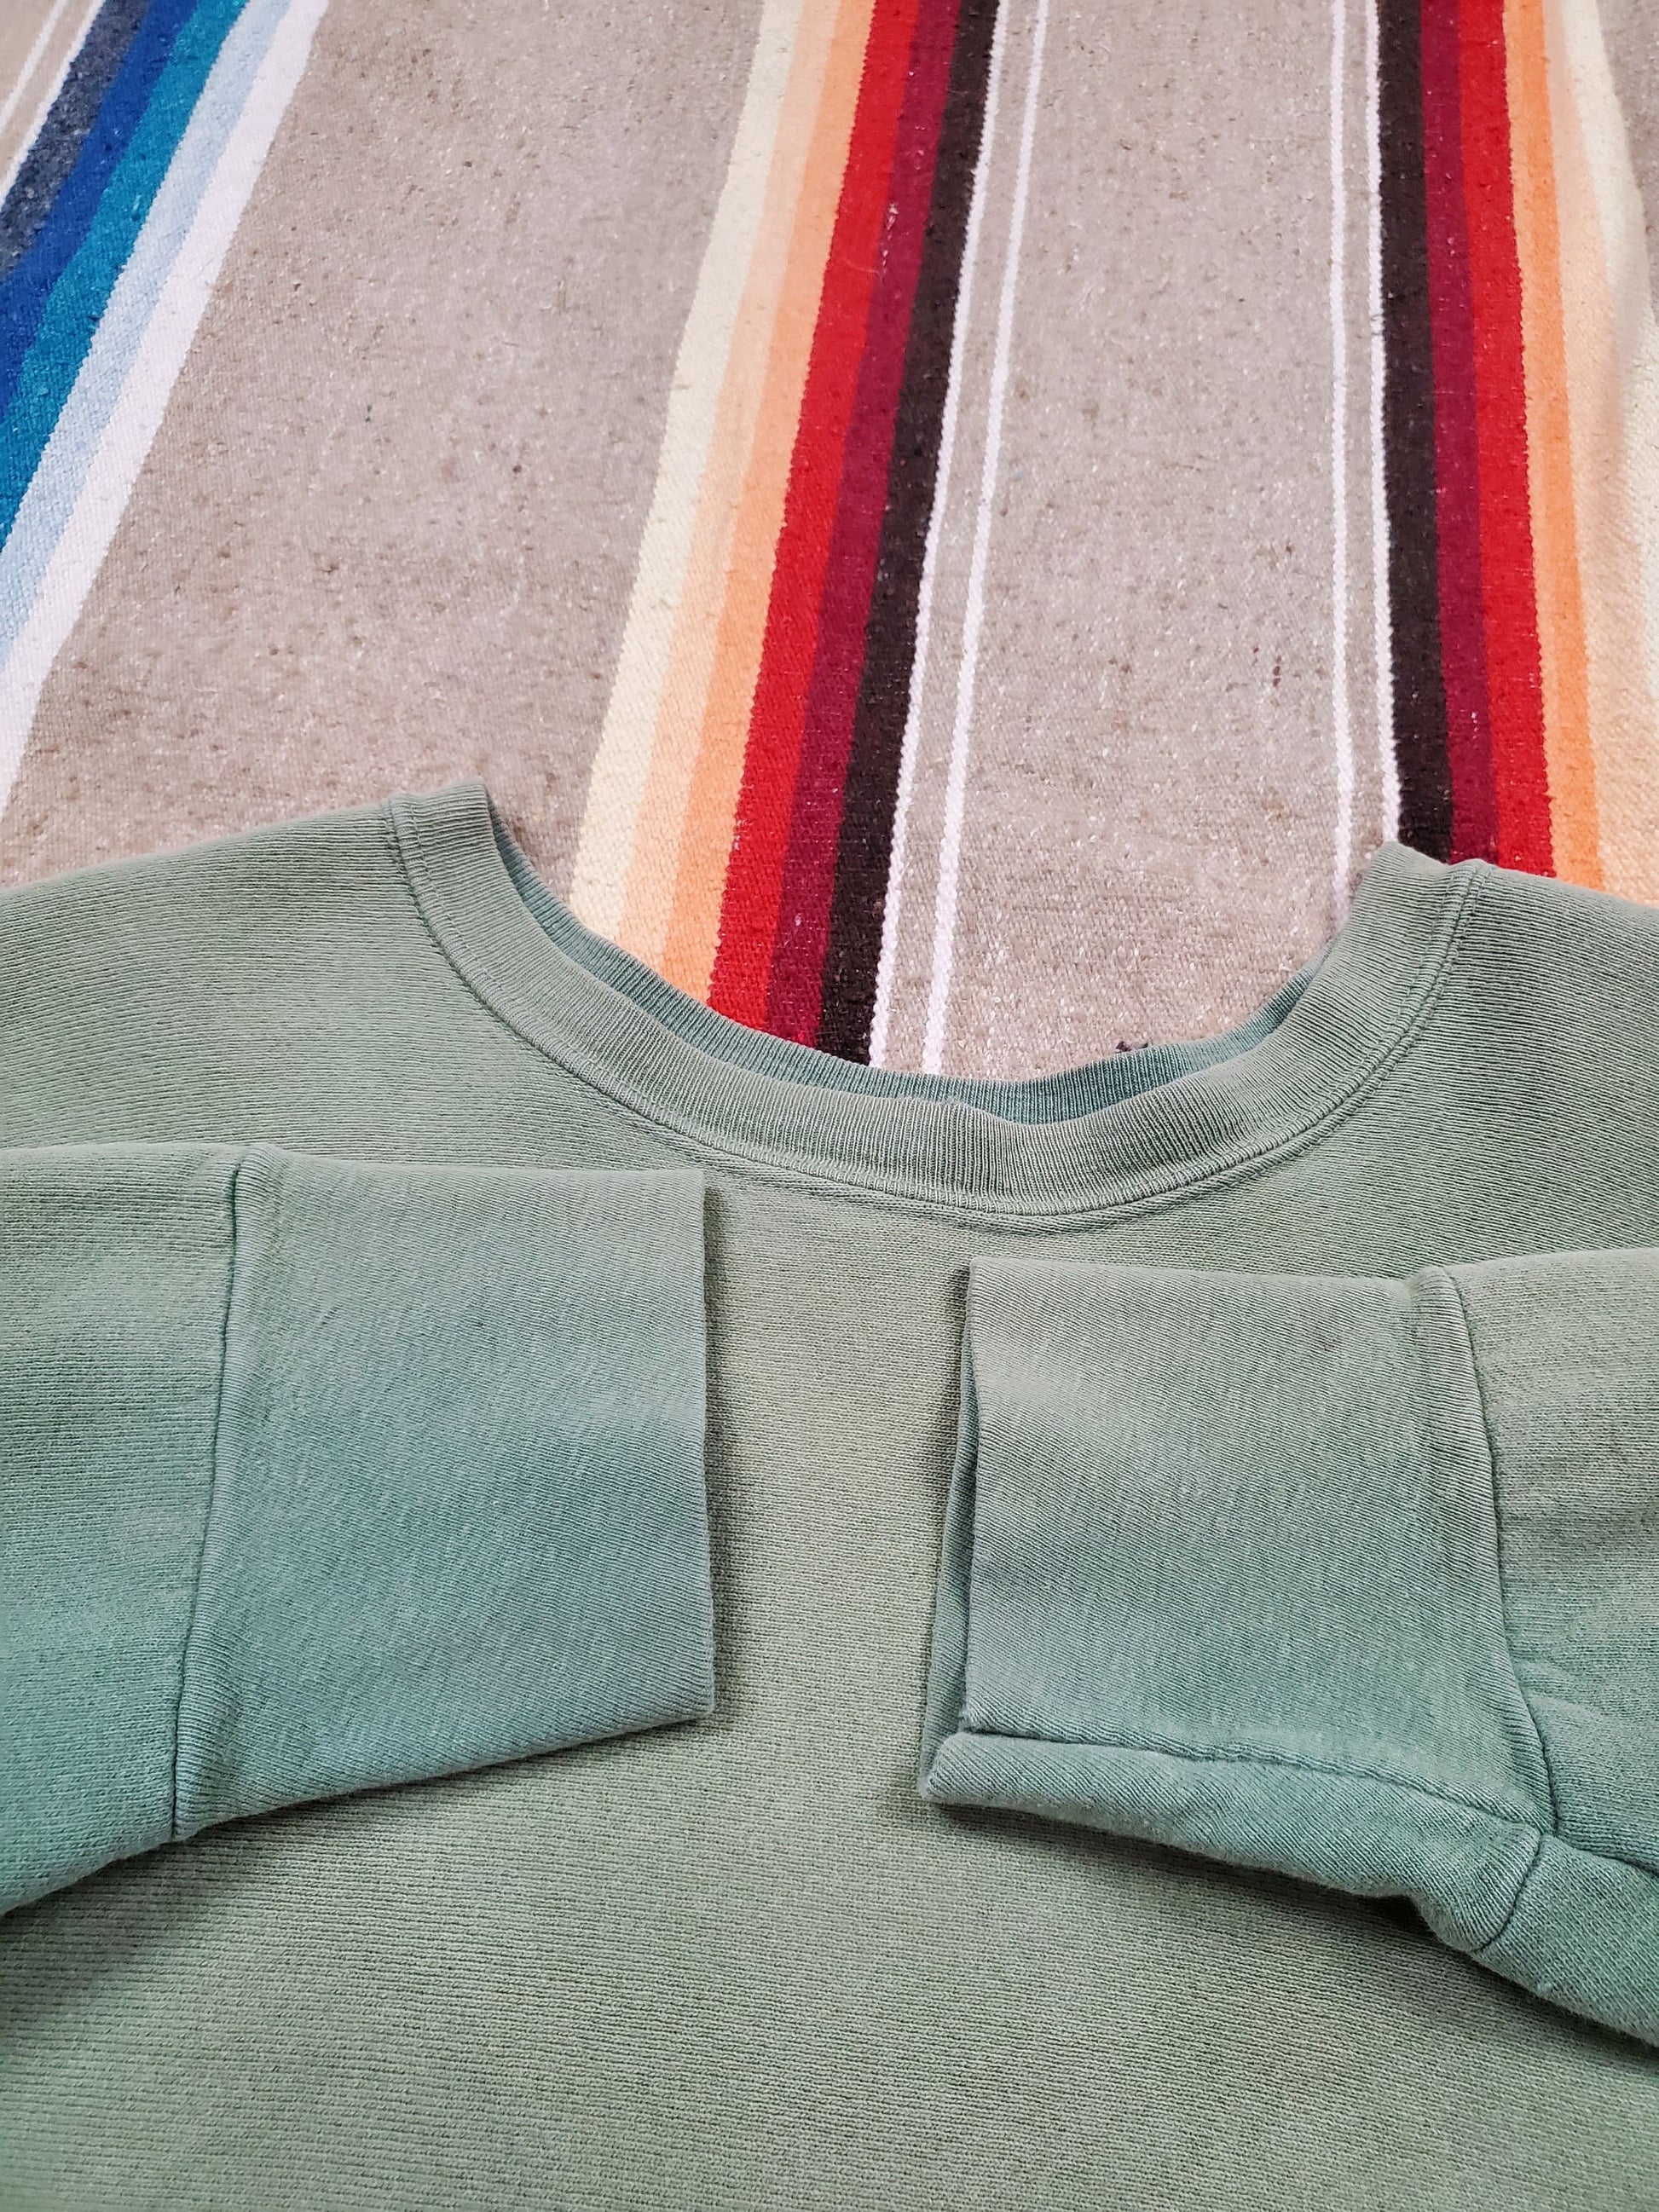 1980s SportClub Faded Green Reverse Weave Style Sweatshirt Made in USA Size L